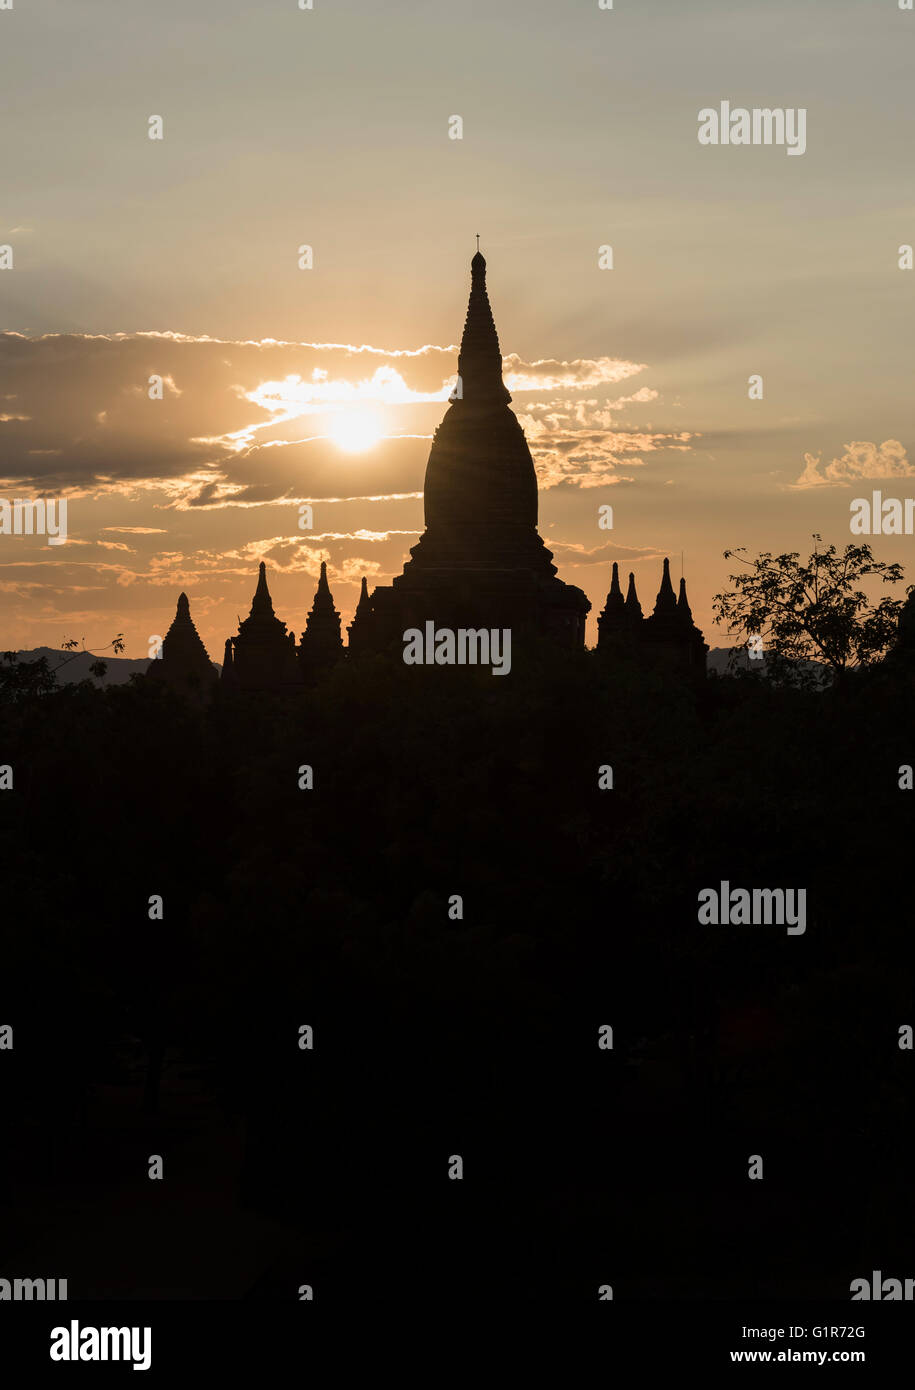 Sunset over temples of Bagan, Burma - Myanmar Stock Photo